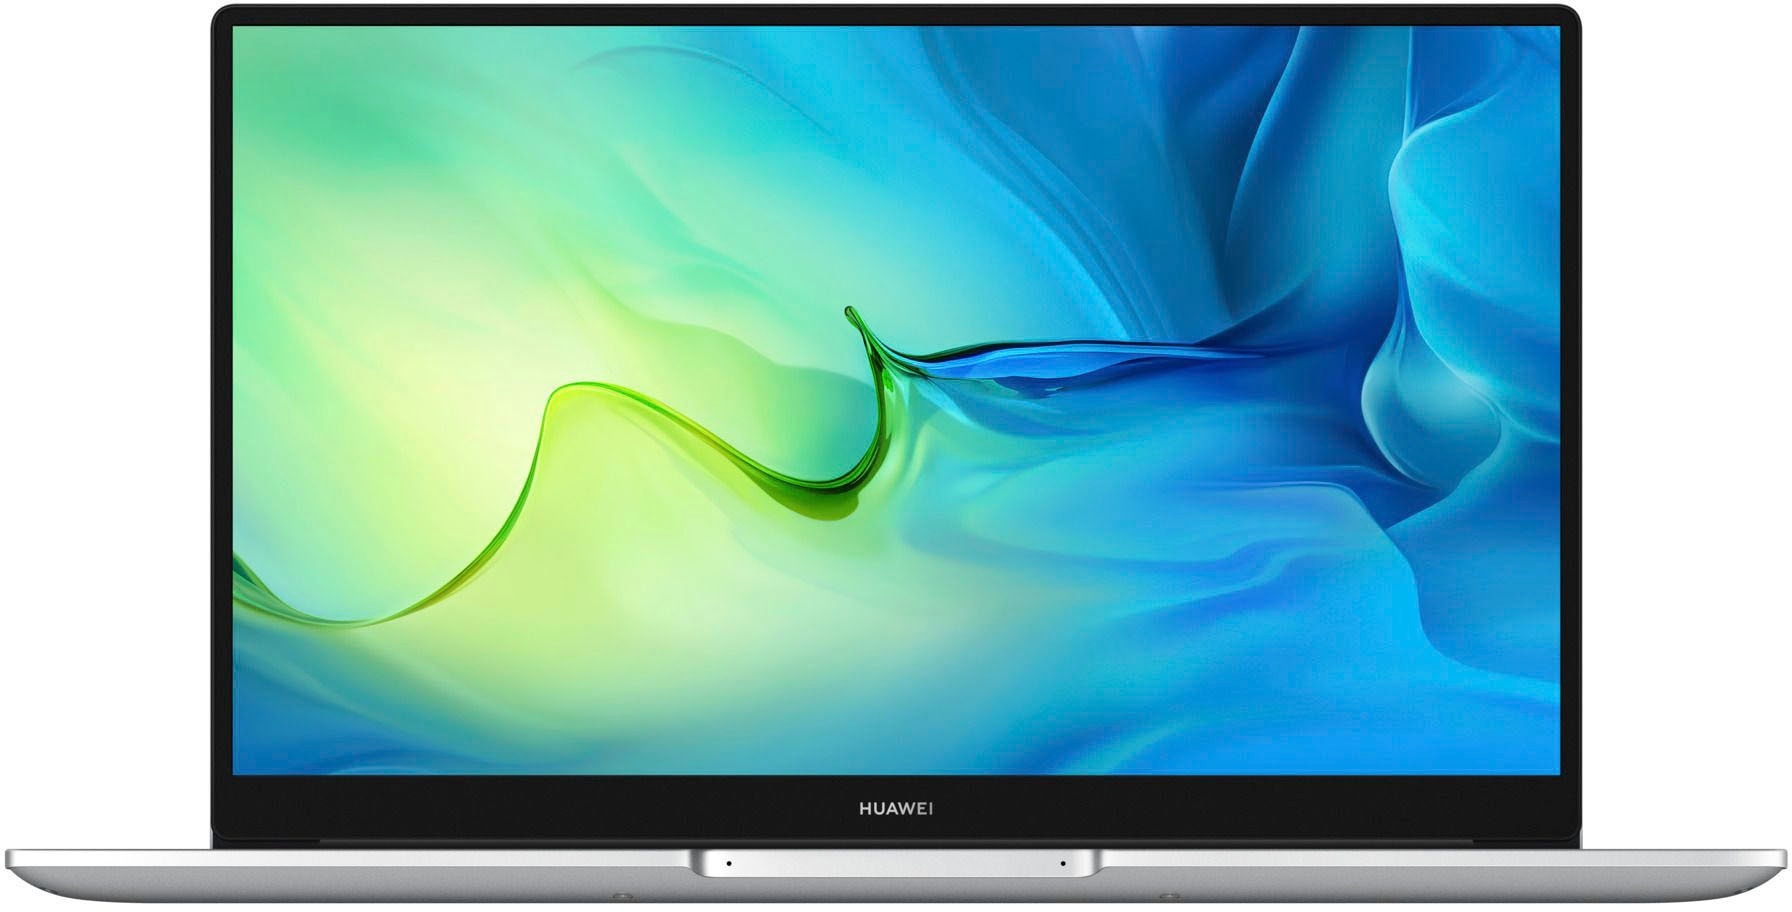 HUAWEI MateBook D 15 Laptop |15,6 Zoll Ultrabook mit Eye Comfort FullView Display | 11. Generation Intel Core i5 Prozessor mit 8 GB RAM 512 GB SSD Speicher| Metallgehäuse, Silber